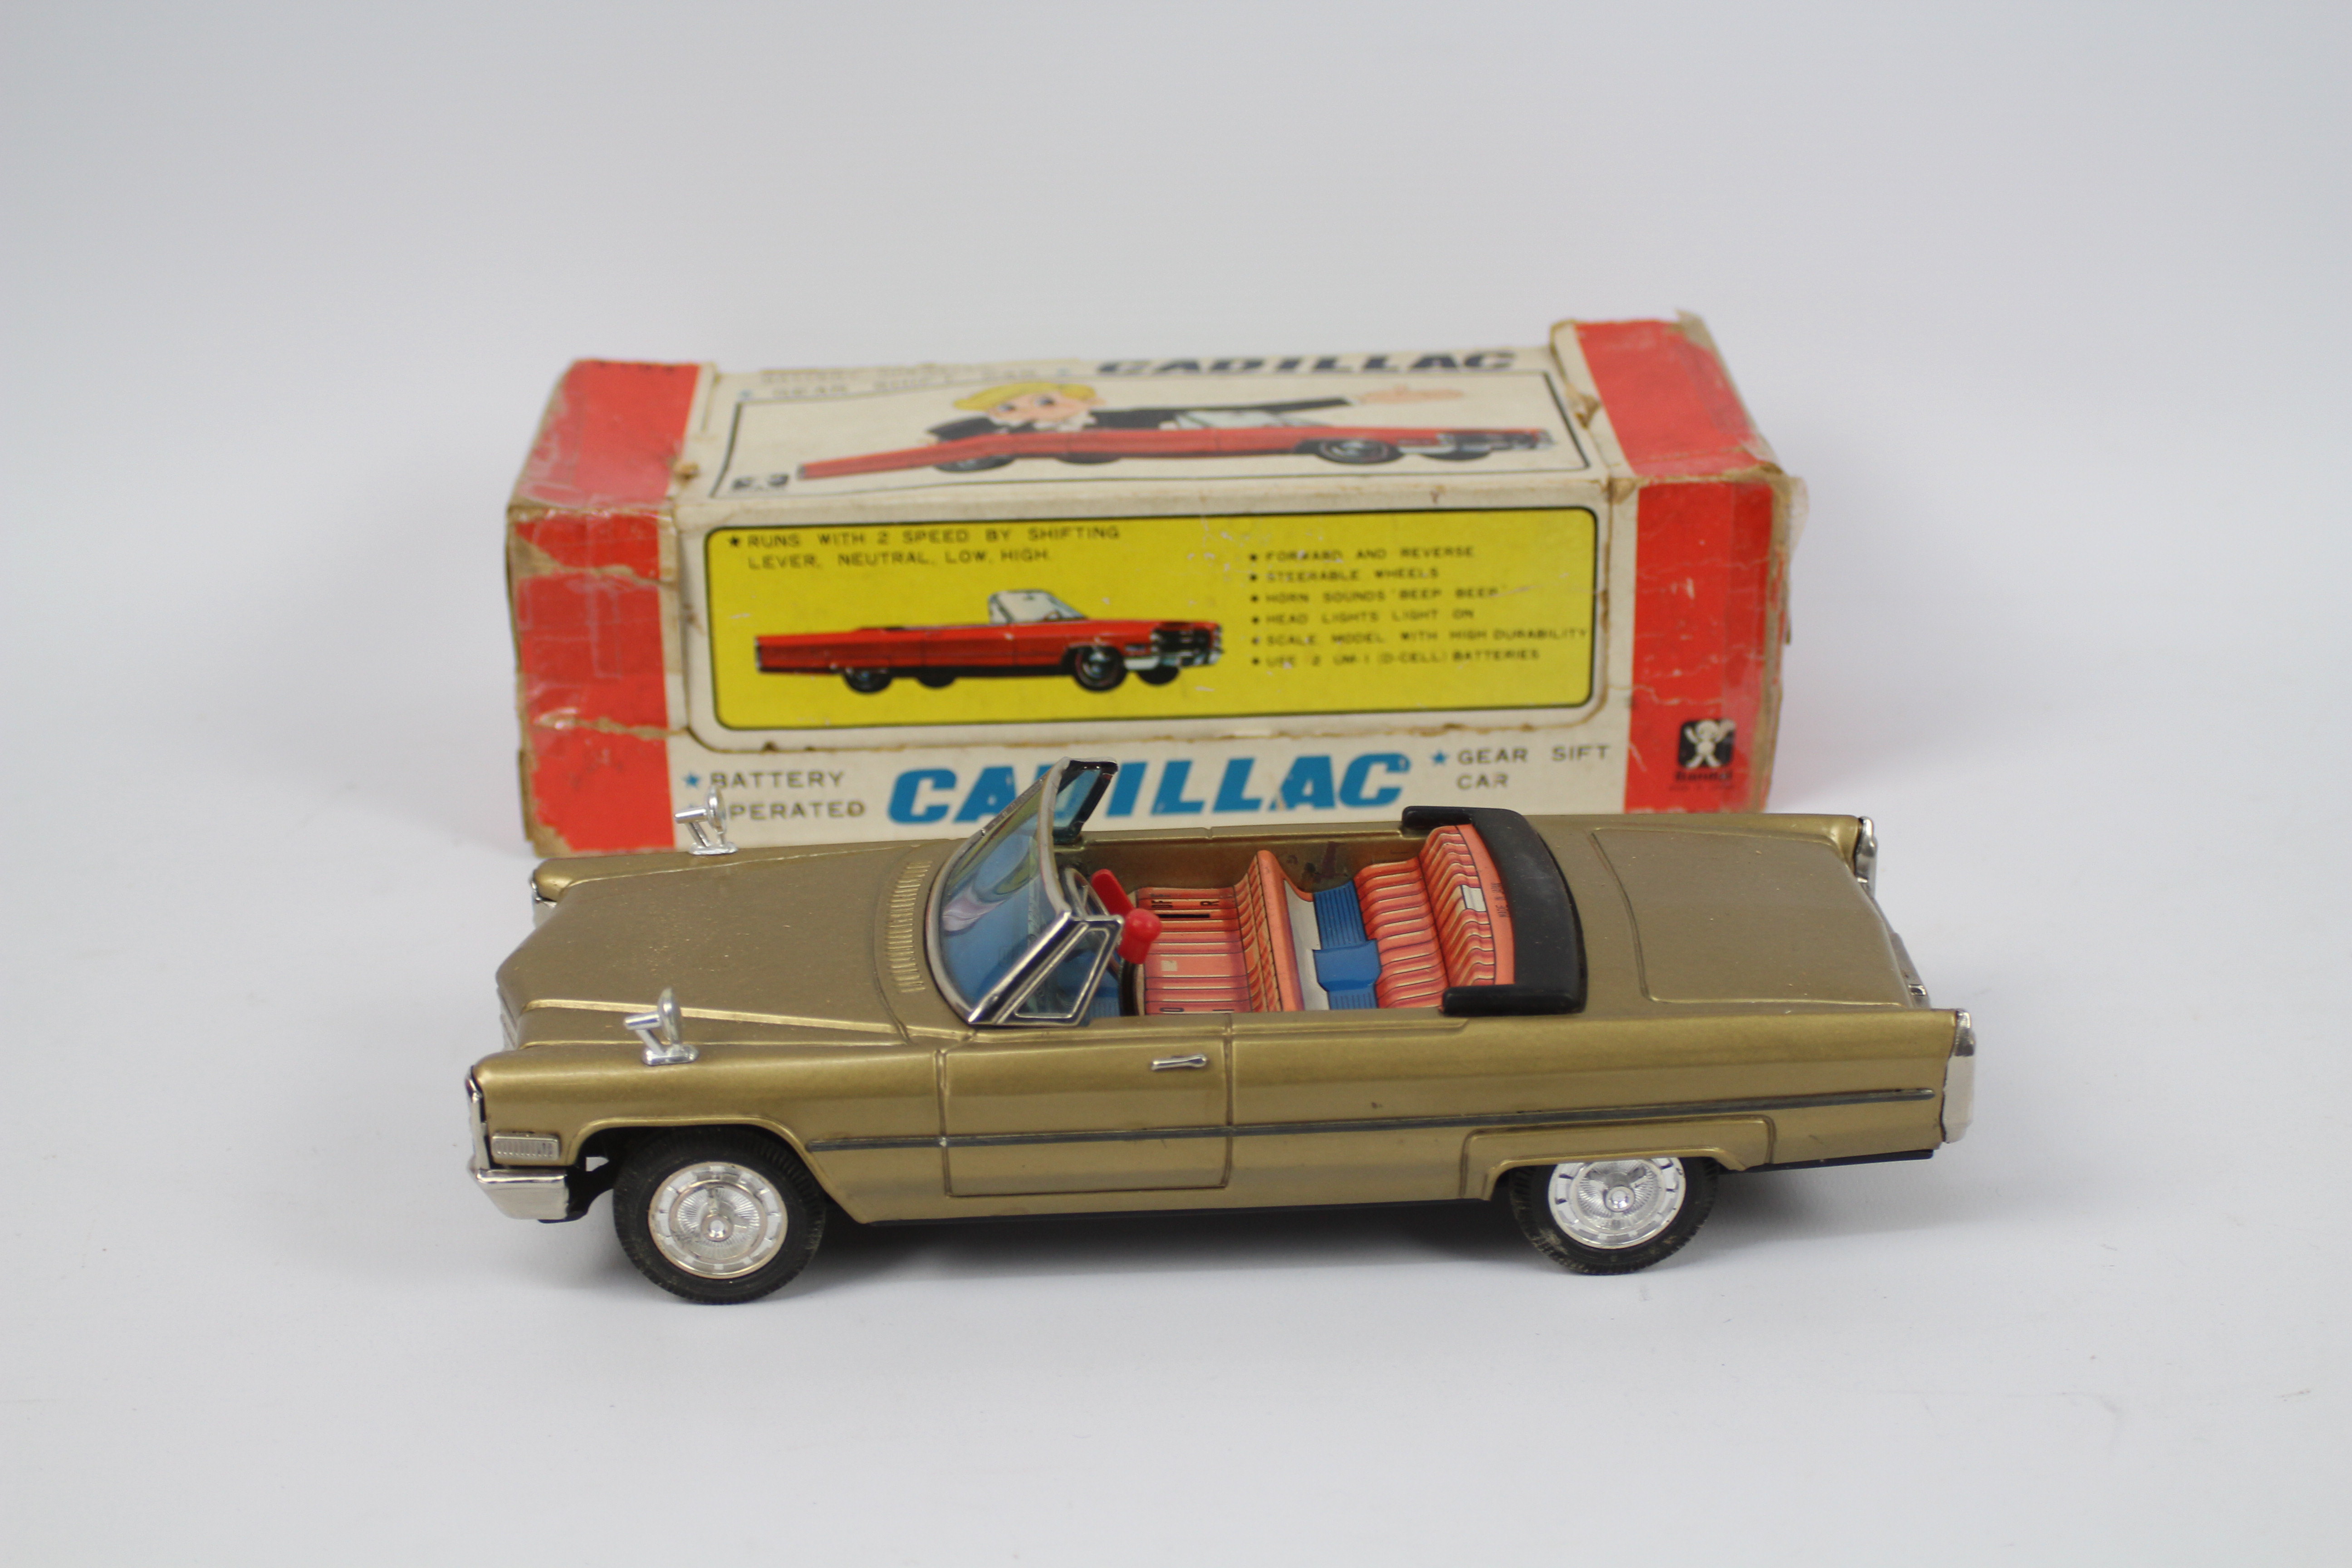 Bandai - A boxed battery powered pressed metal Cadillac Gear Shift Car # 4102. - Image 5 of 5